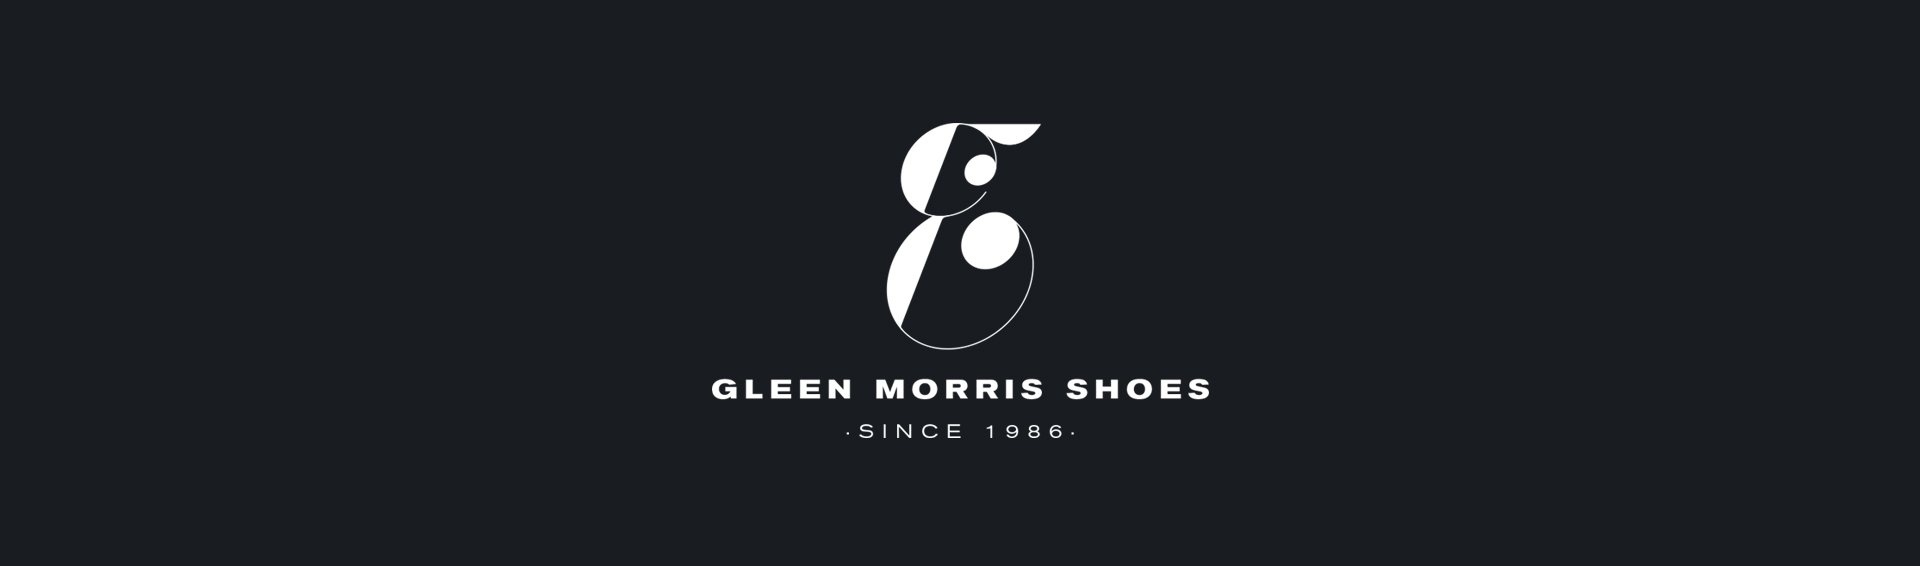 glennmorris_logotype_identity_corporate